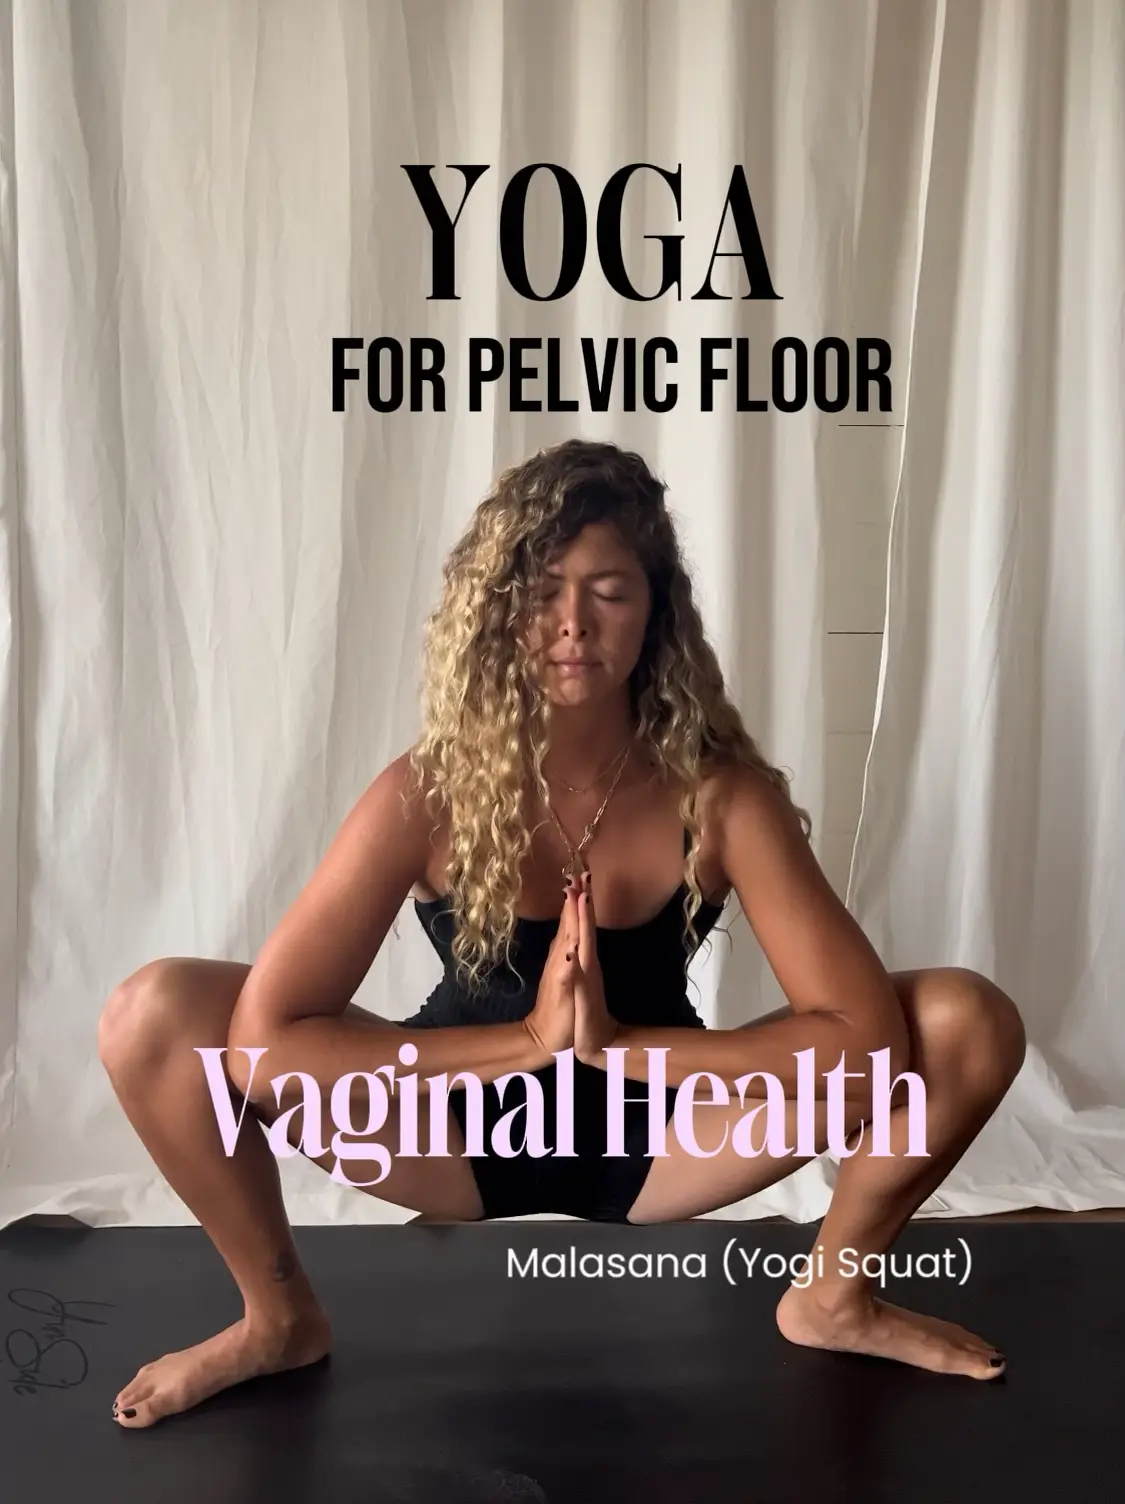 PELVIC FLOOR STRETCHES – Elena Miss Yoga